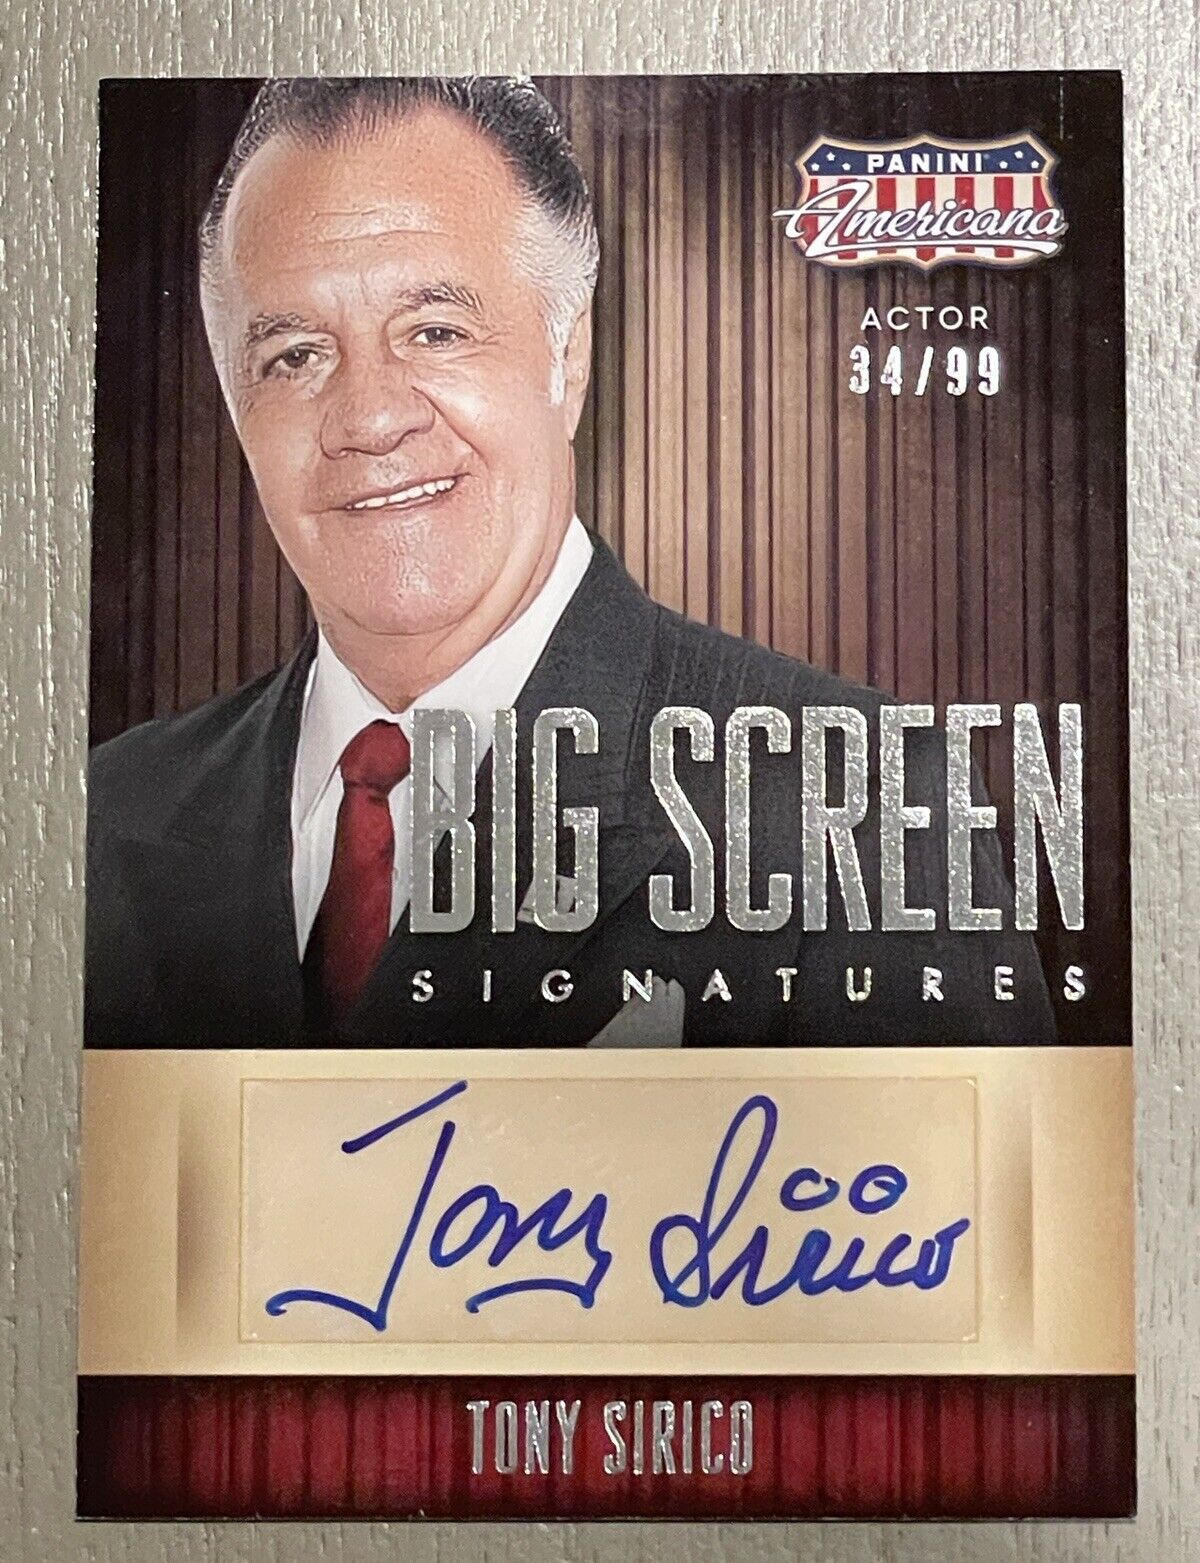 Tony Sirico The Sopranos Big Screen Signatures Autograph Signed Card Panini